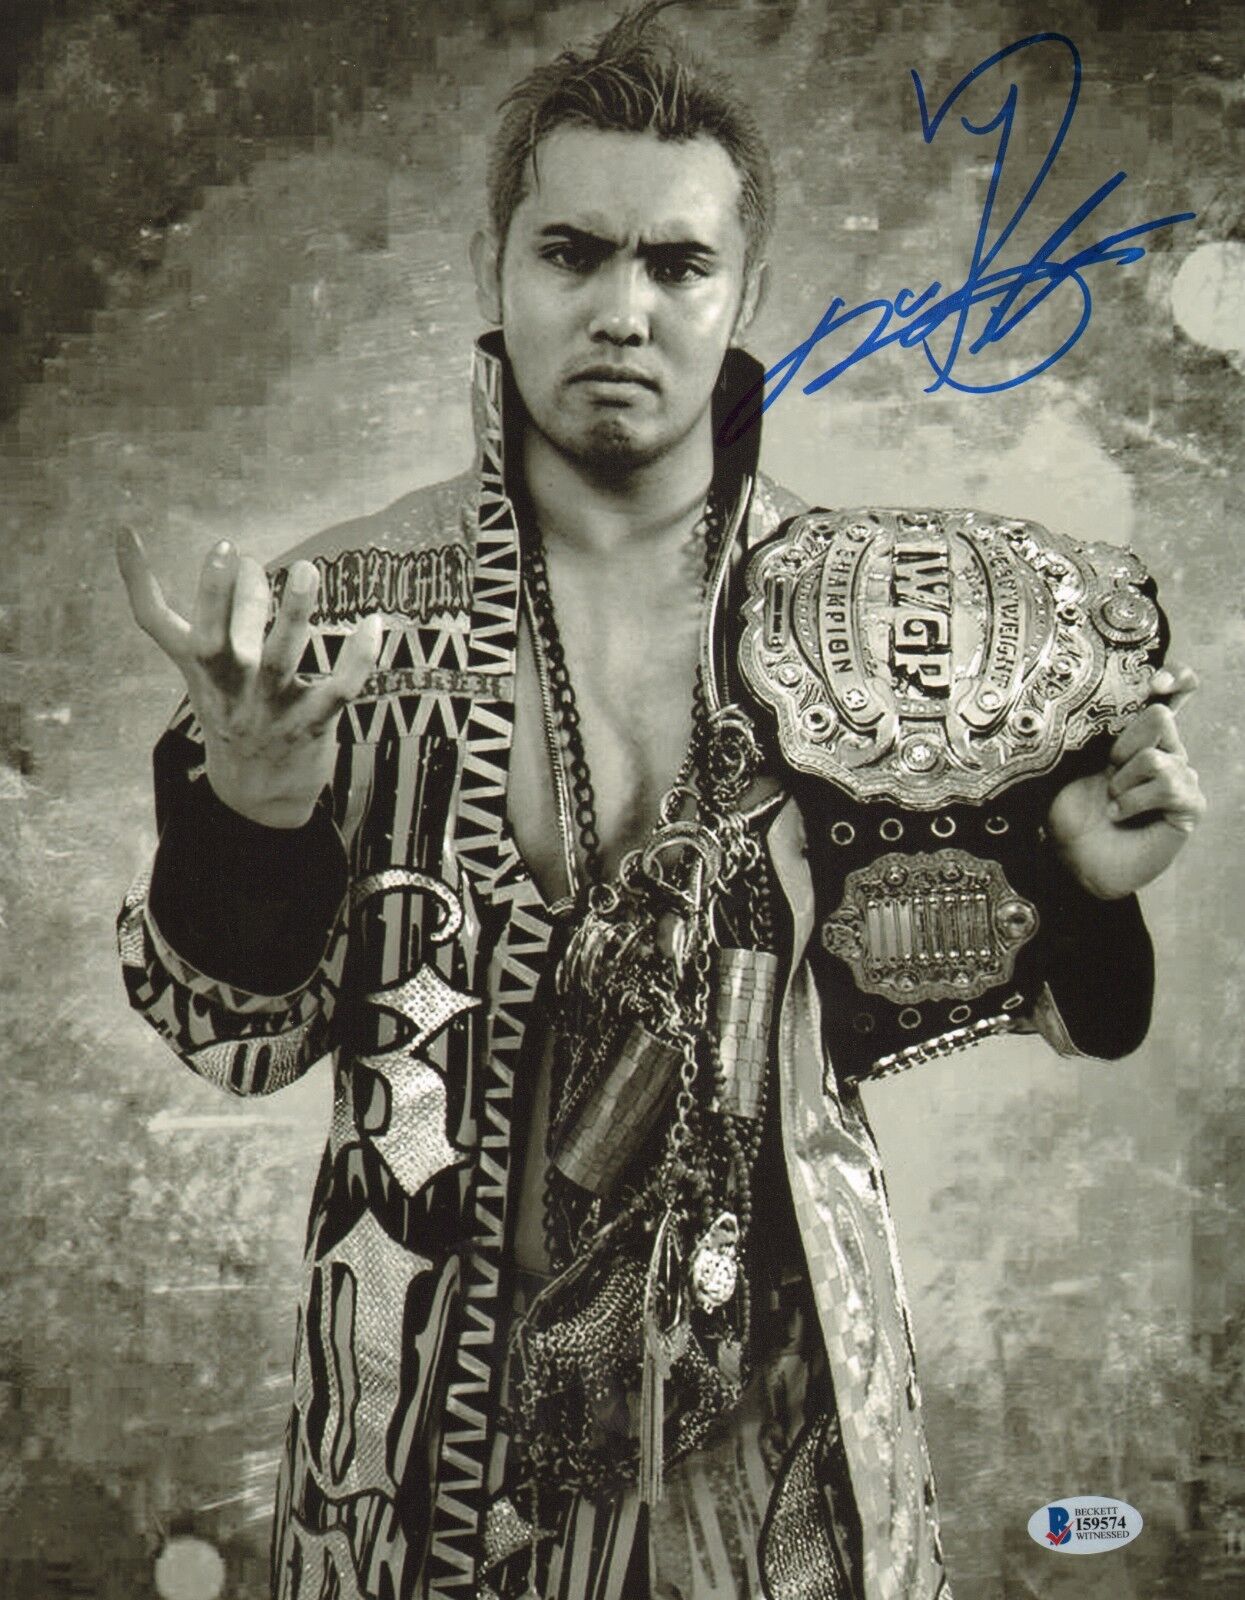 Kazuchika Okada Signed 11x14 Photo Poster painting BAS Beckett COA New Japan Pro Wrestling NJPW